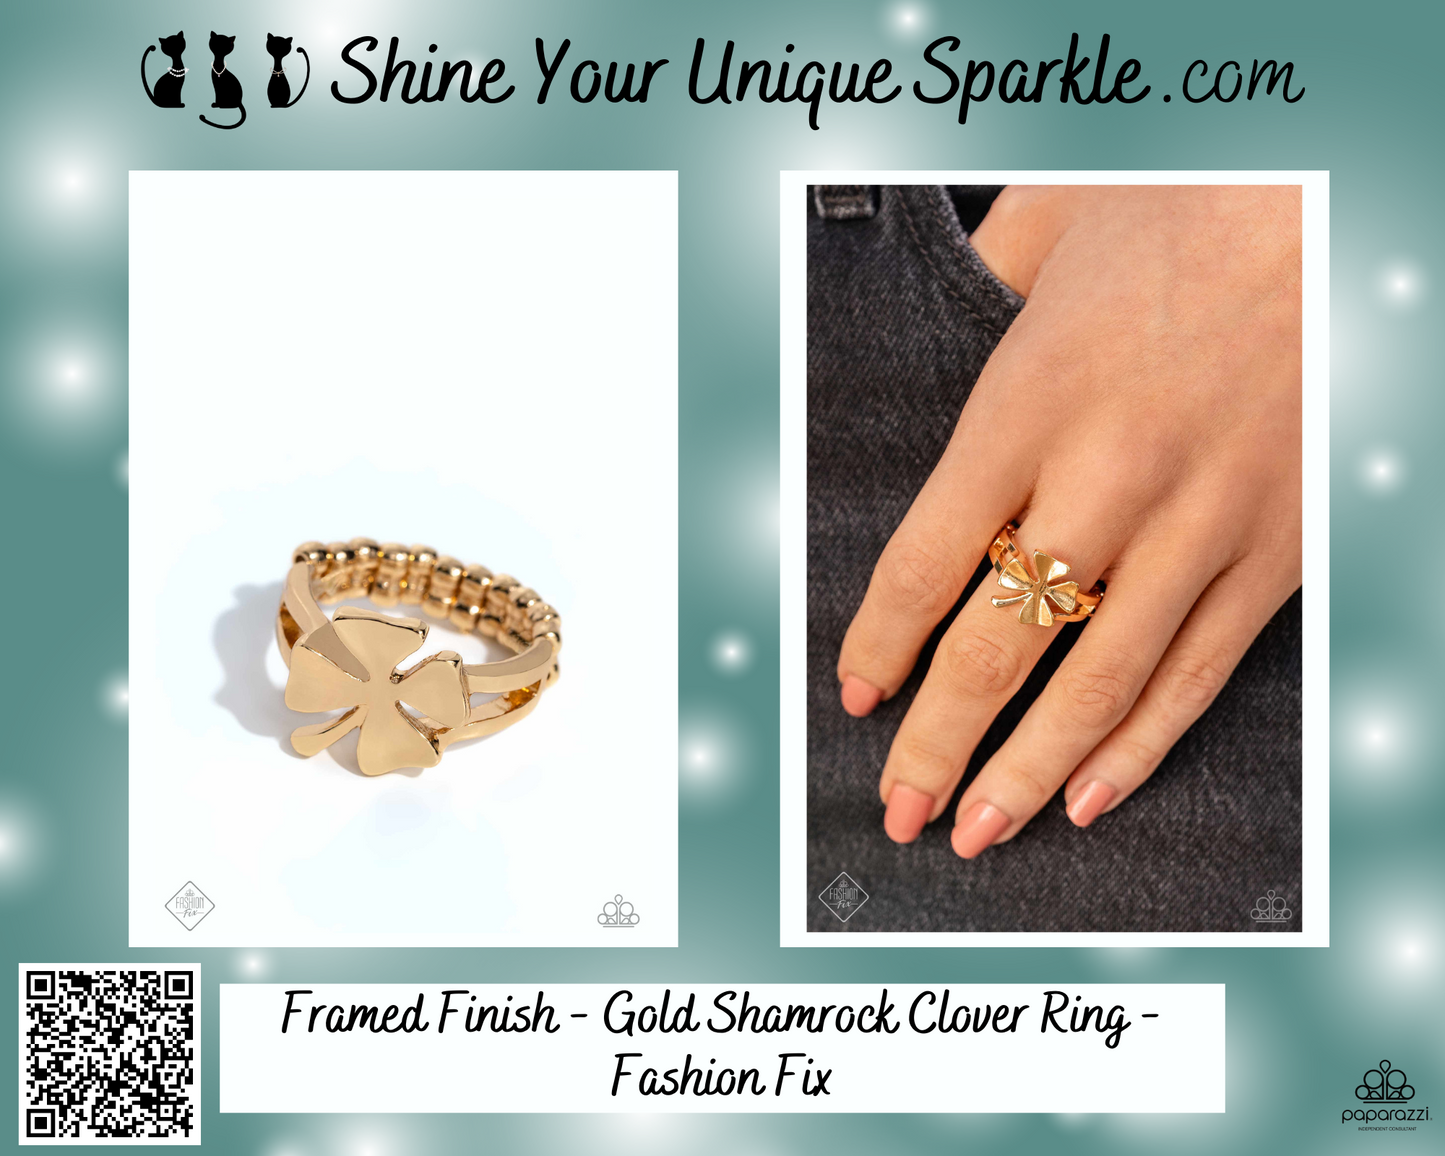 Framed Finish - Gold Shamrock Clover Ring - Fashion Fix